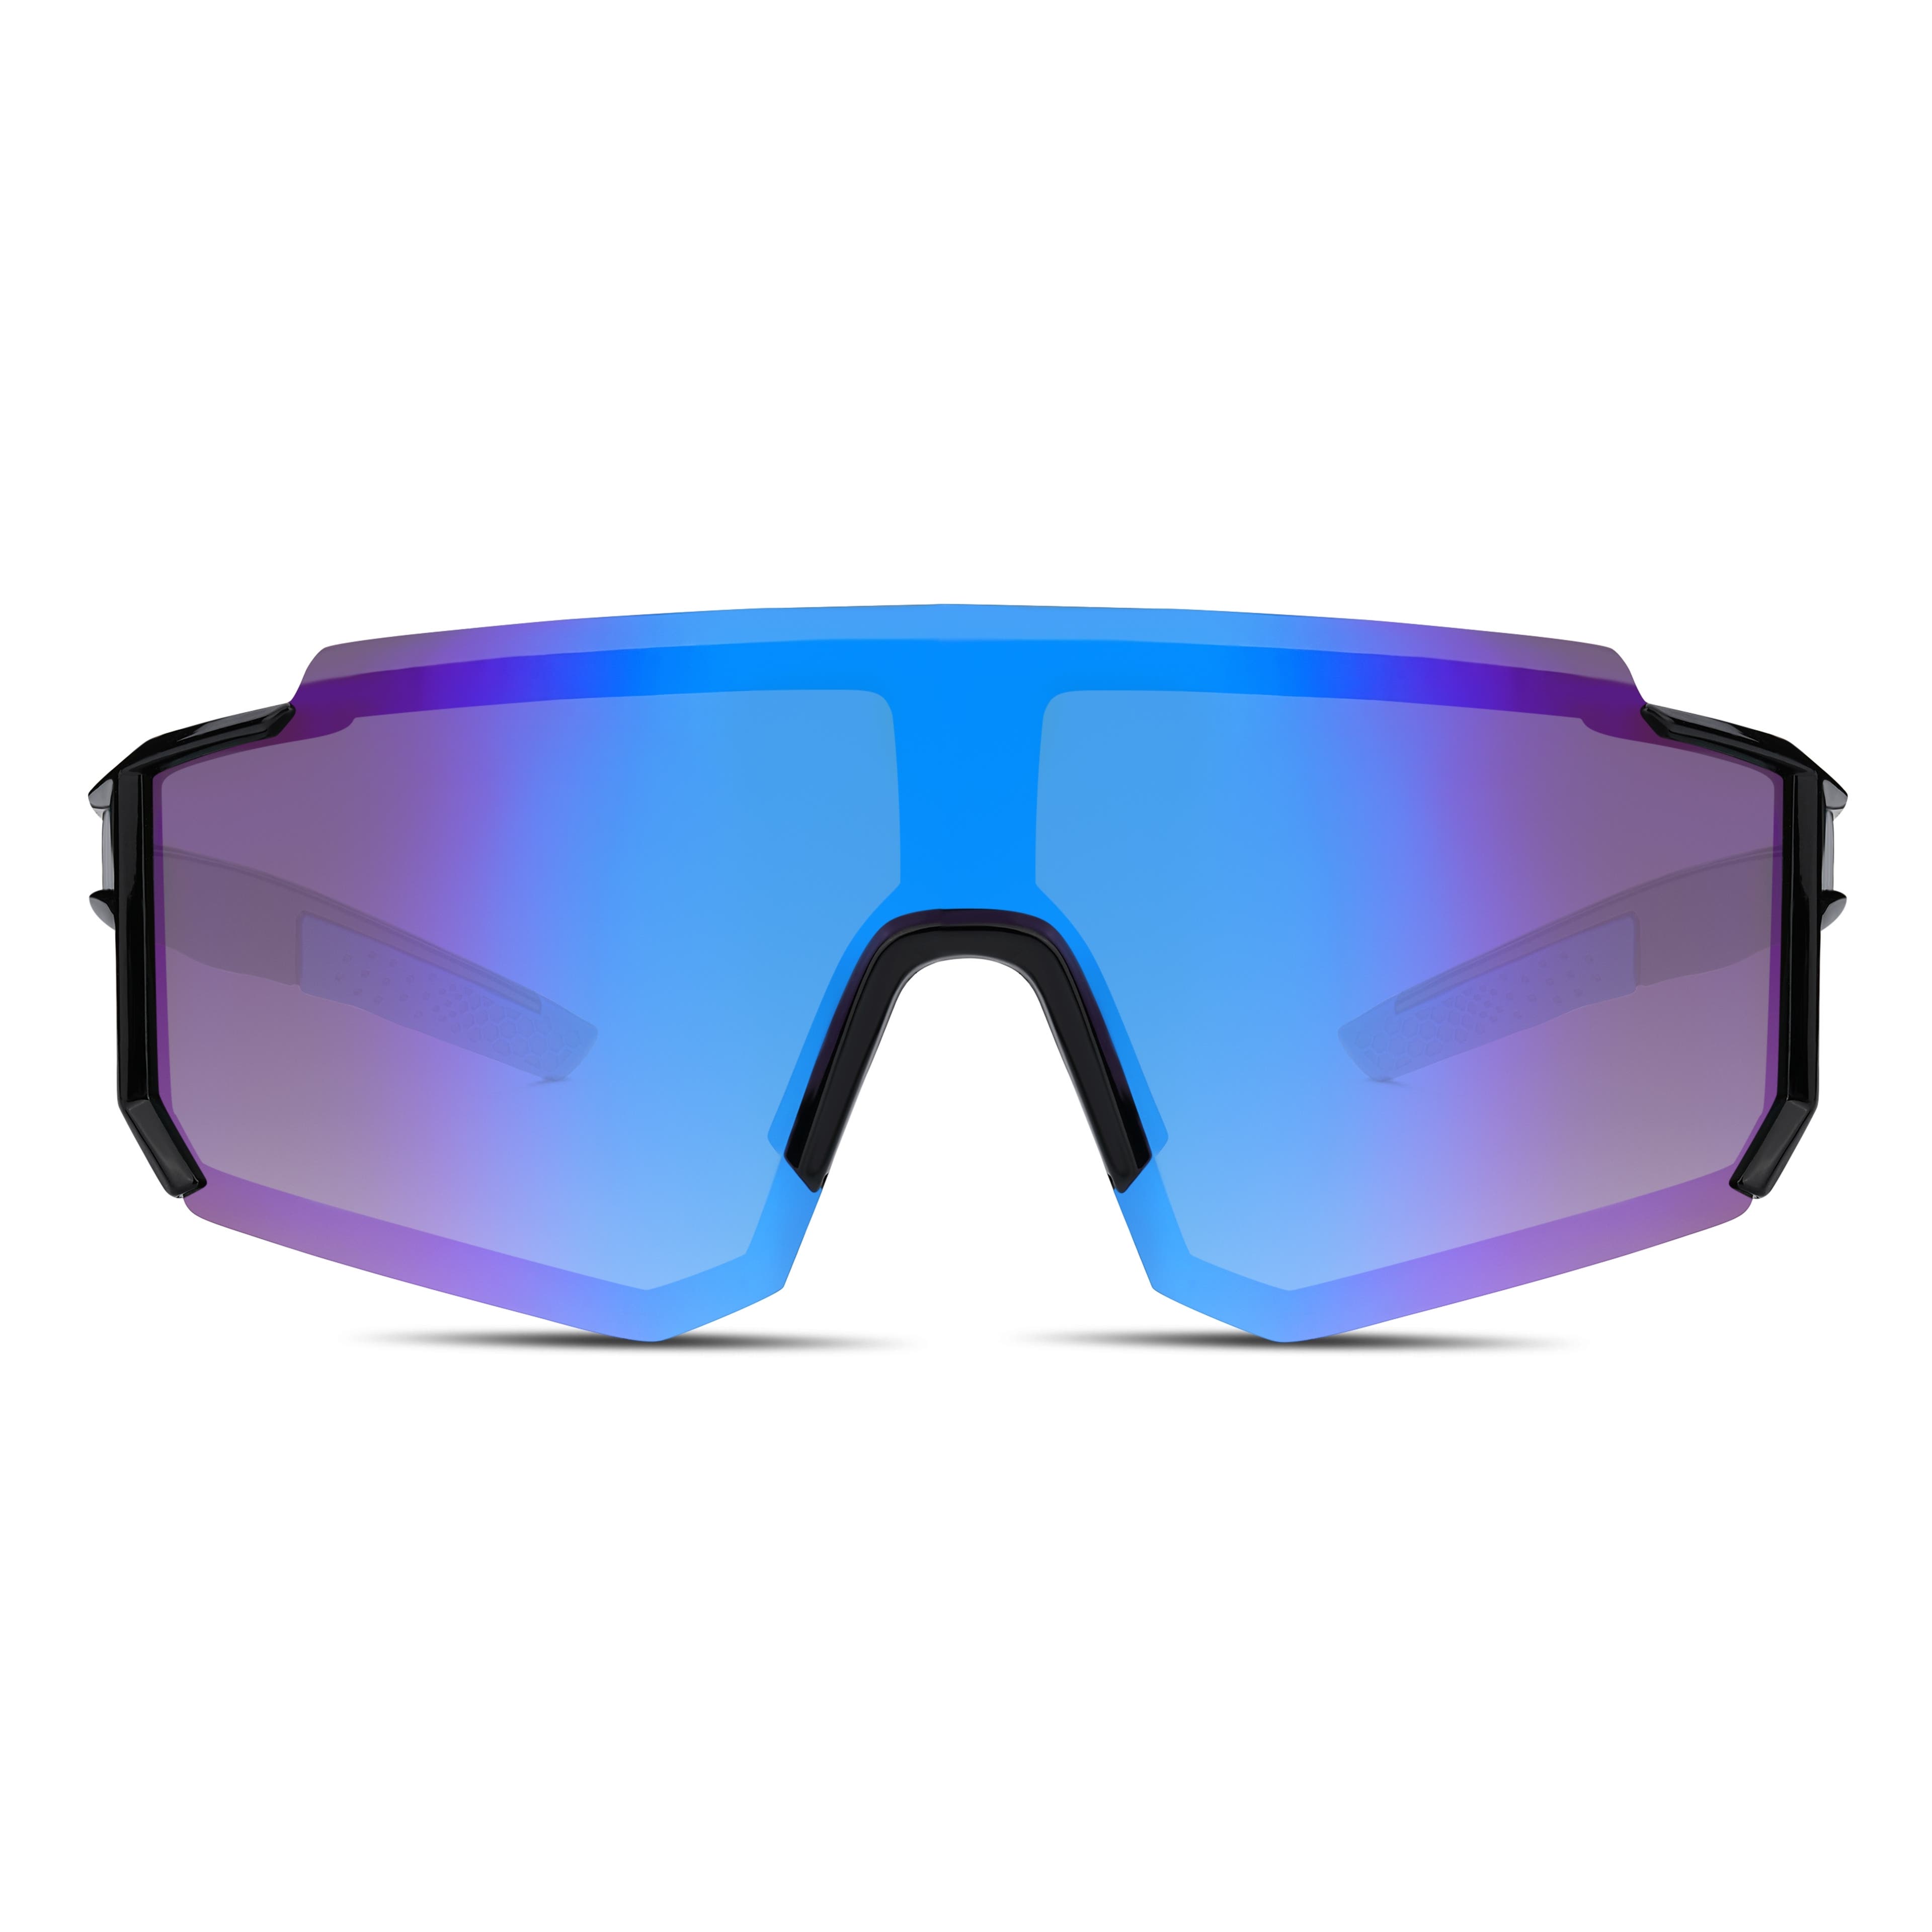 Black & Blue Wraparound Sports Sunglasses